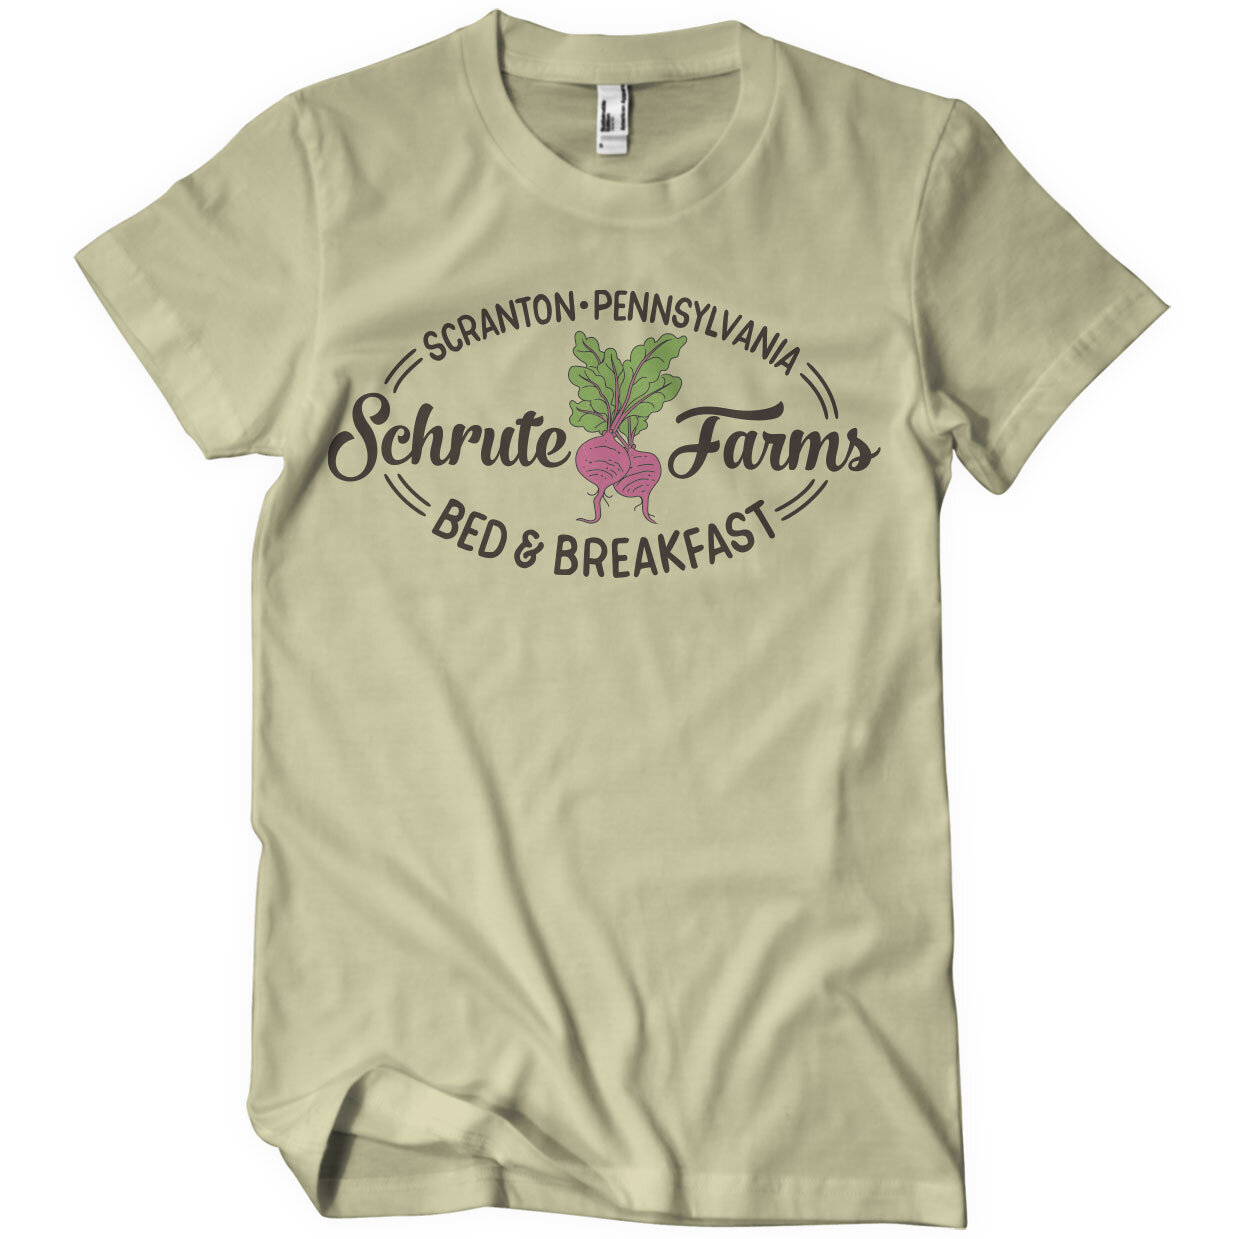 Schrute Farms - Bed & Breakfast T-Shirt